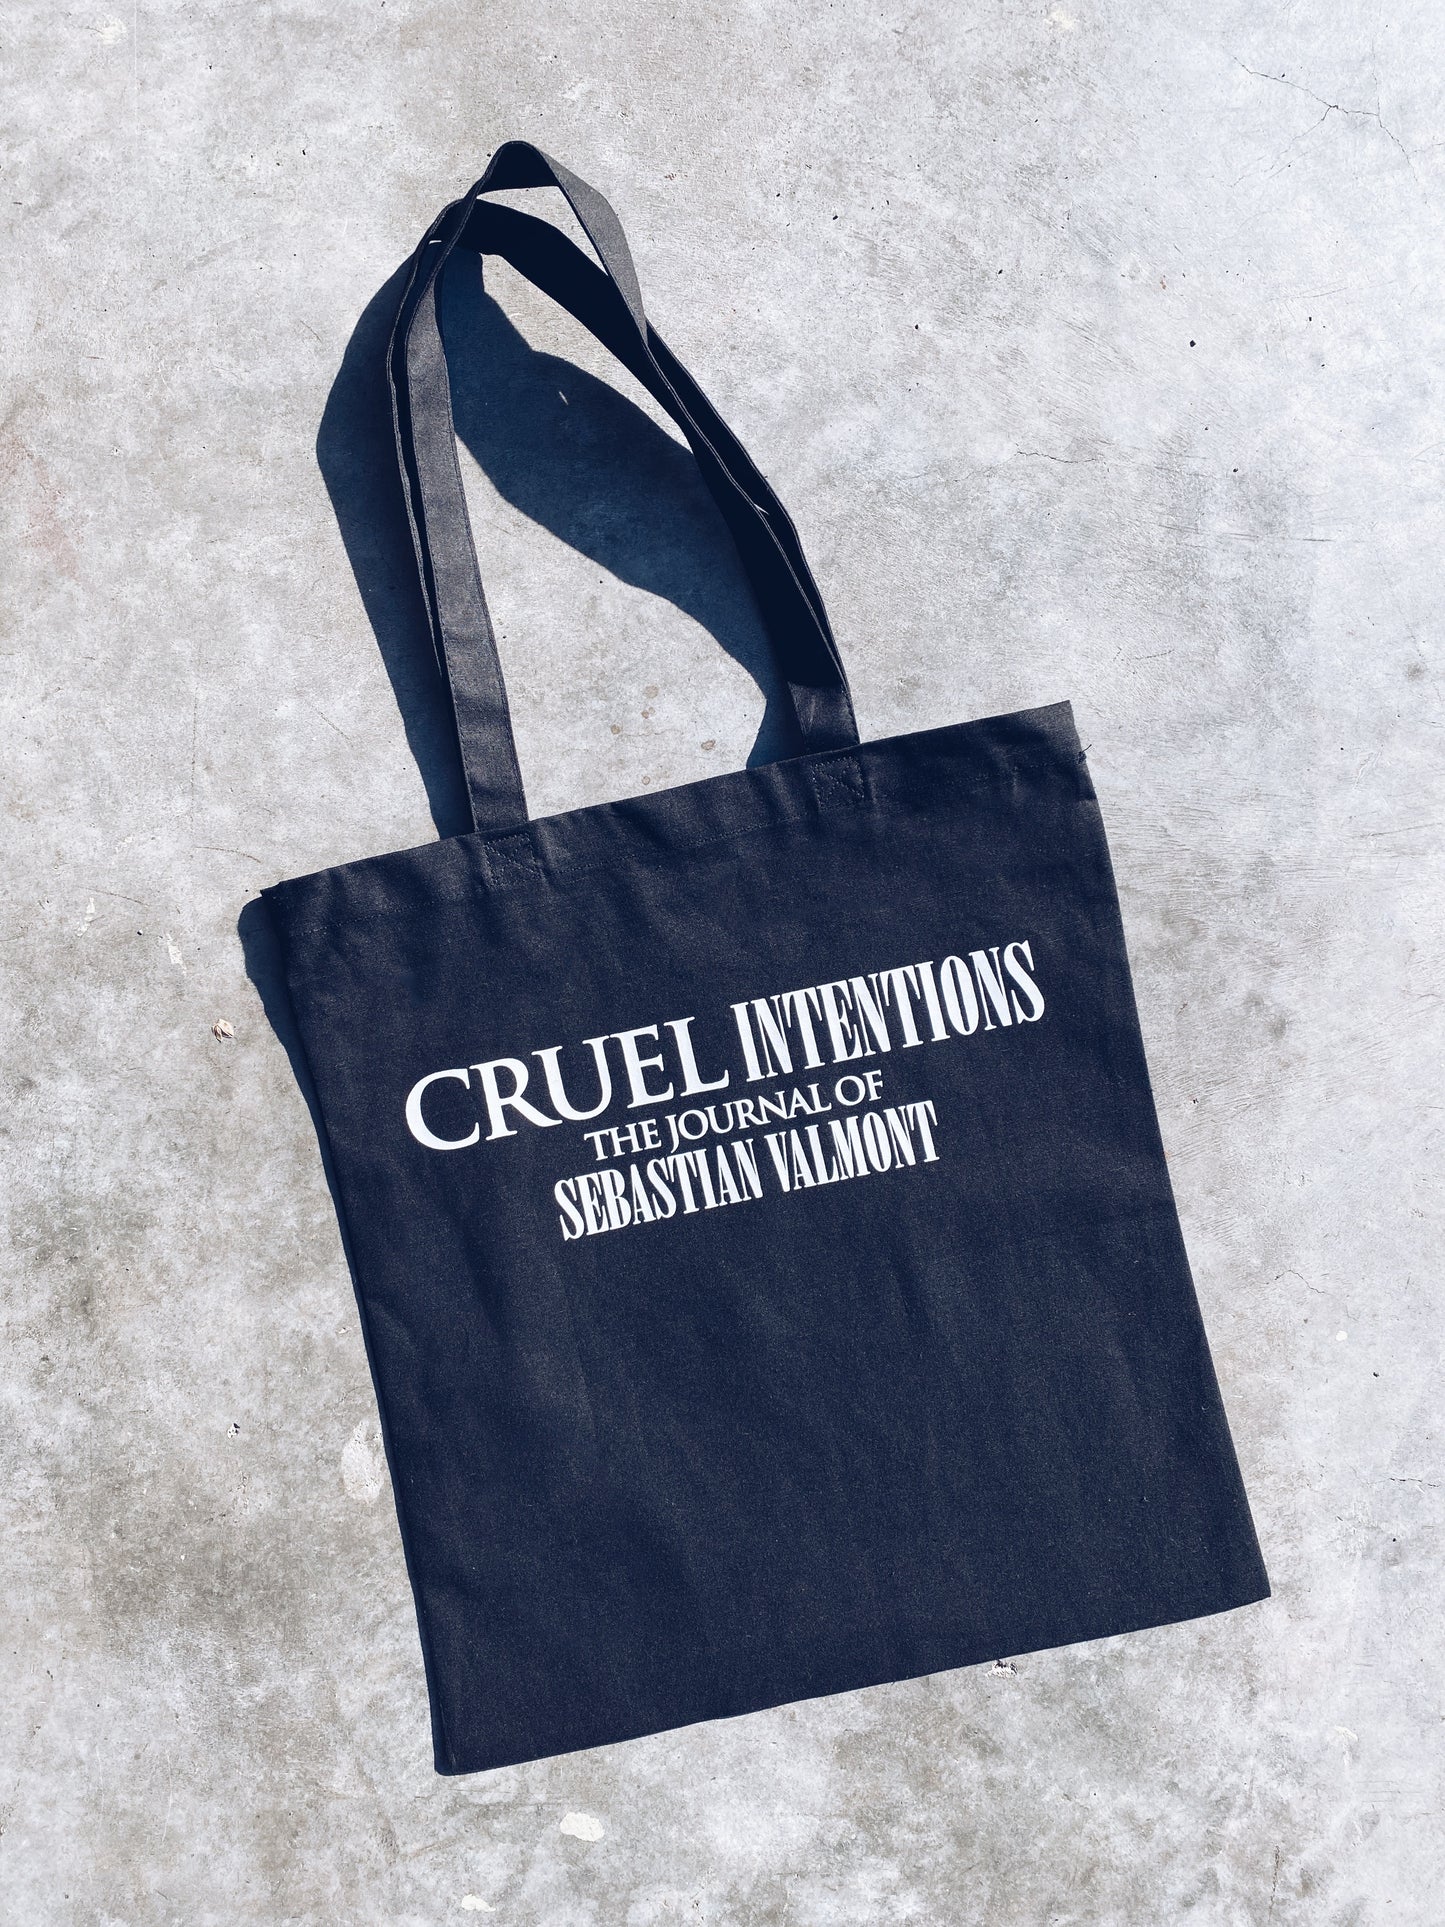 Cruel Intentions The Journal of Sebastian Bag